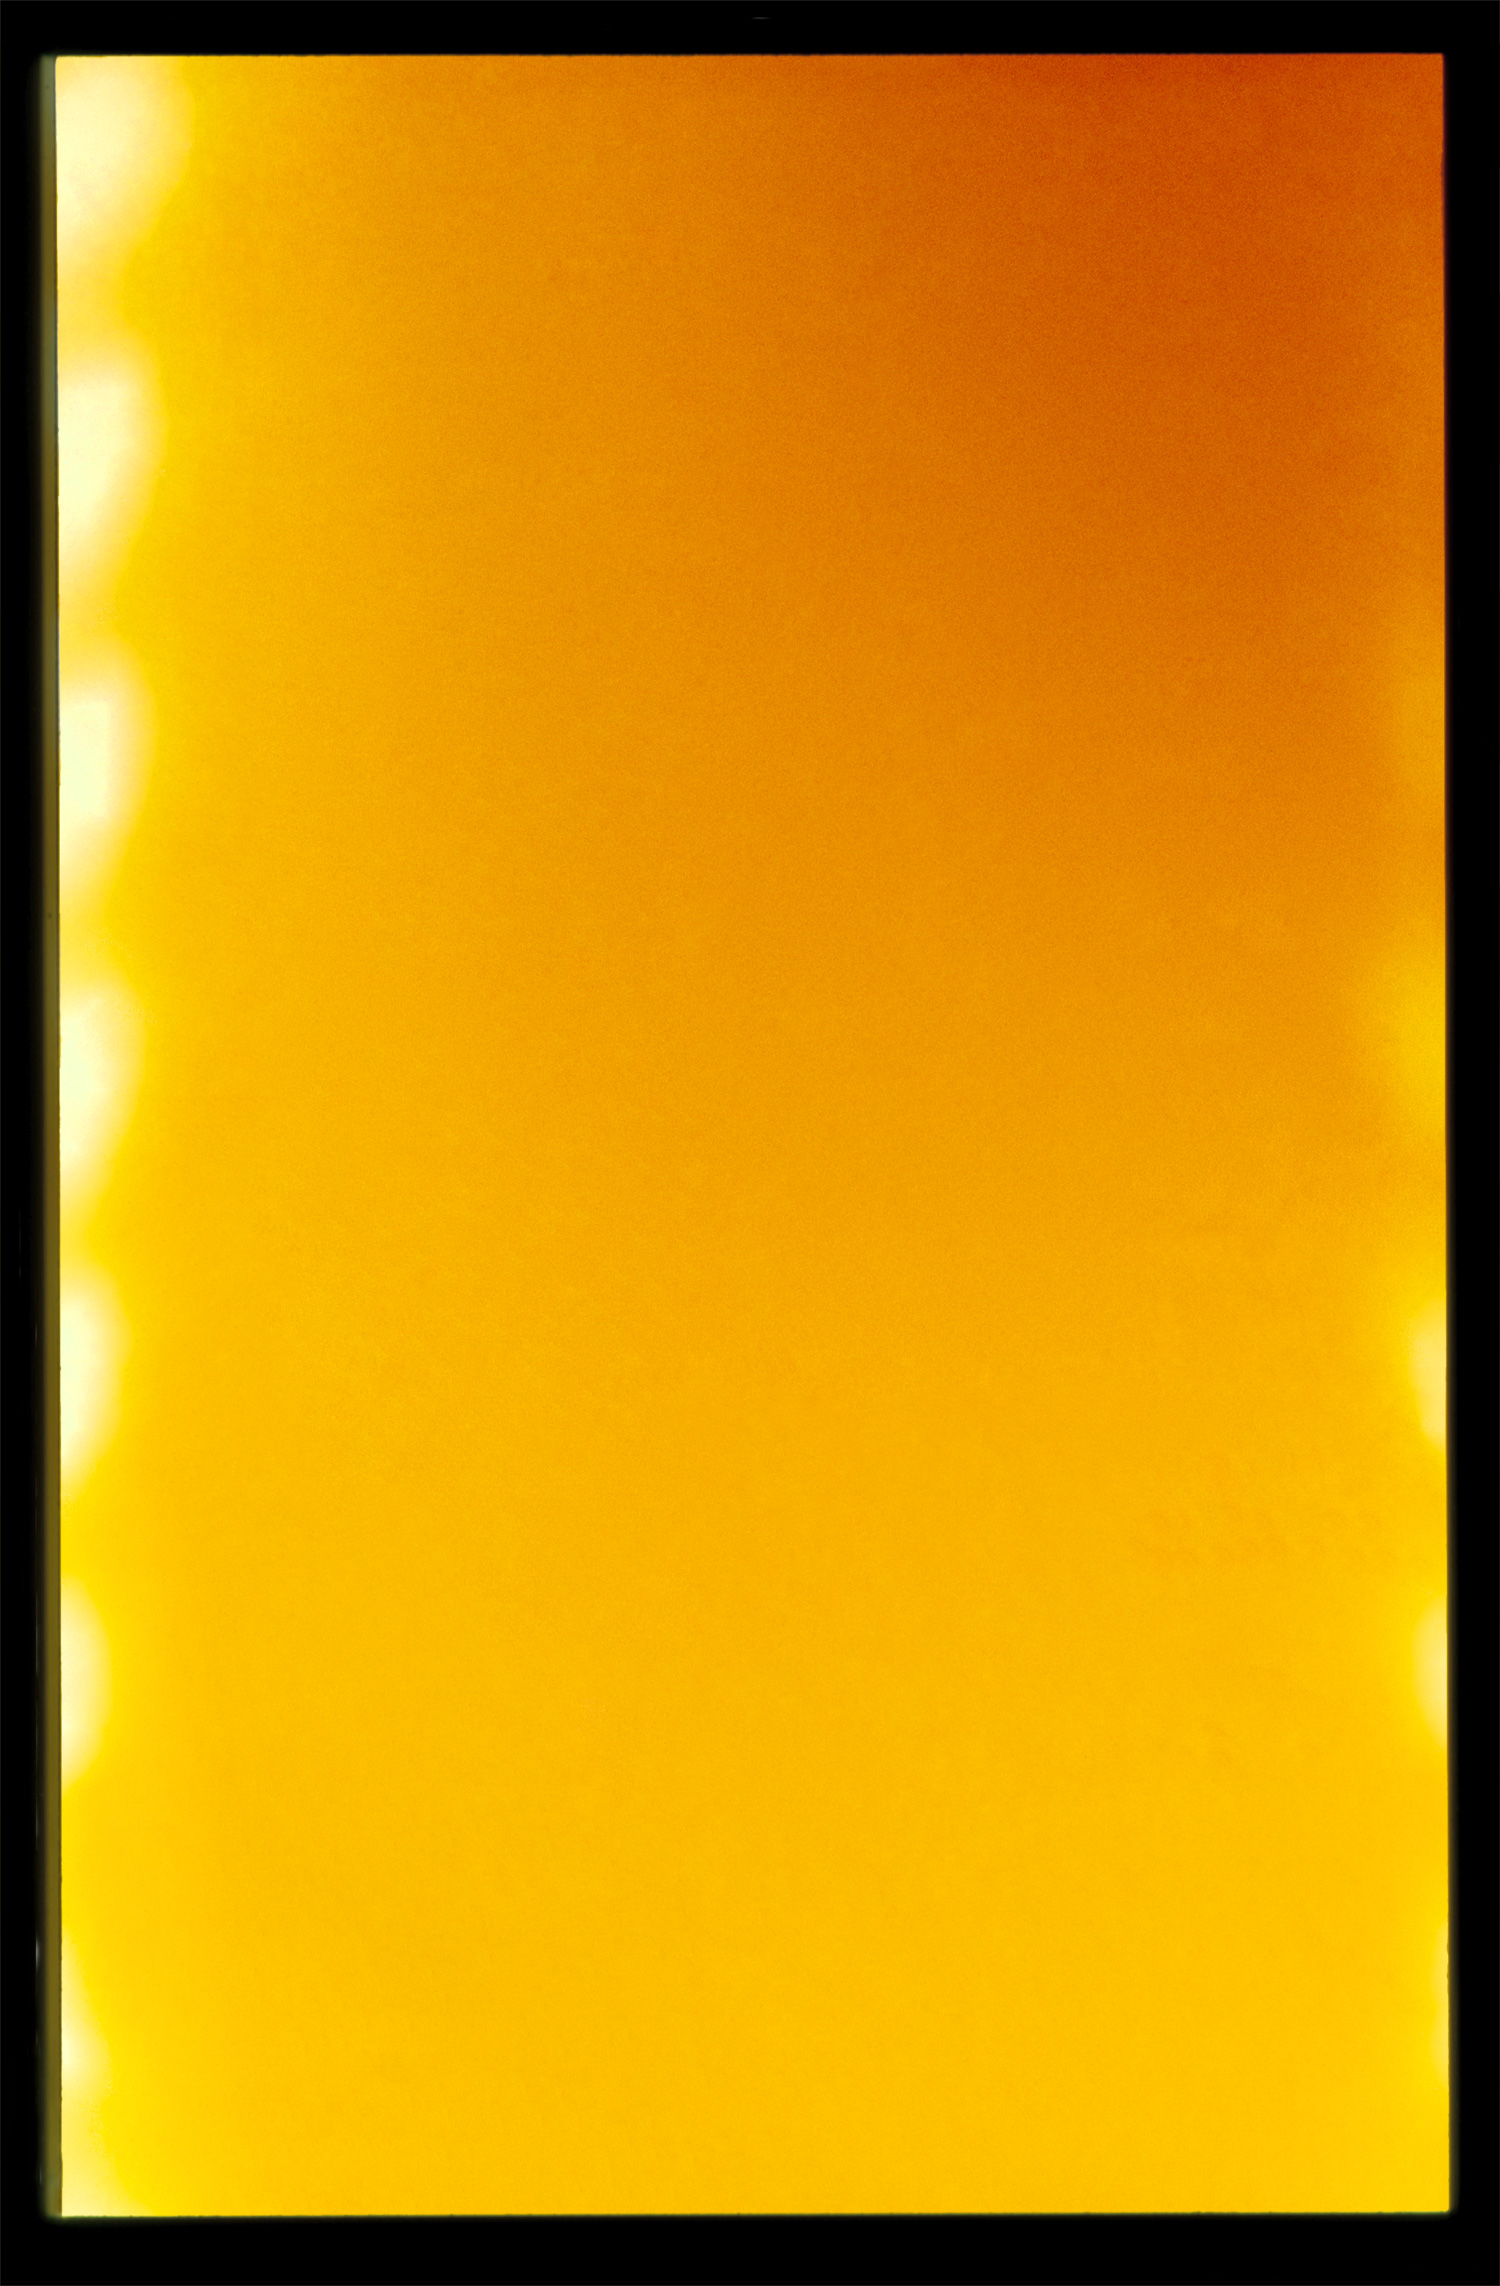   Endings - Yellow - Kodak Safety, No.21. 30/11/1983  